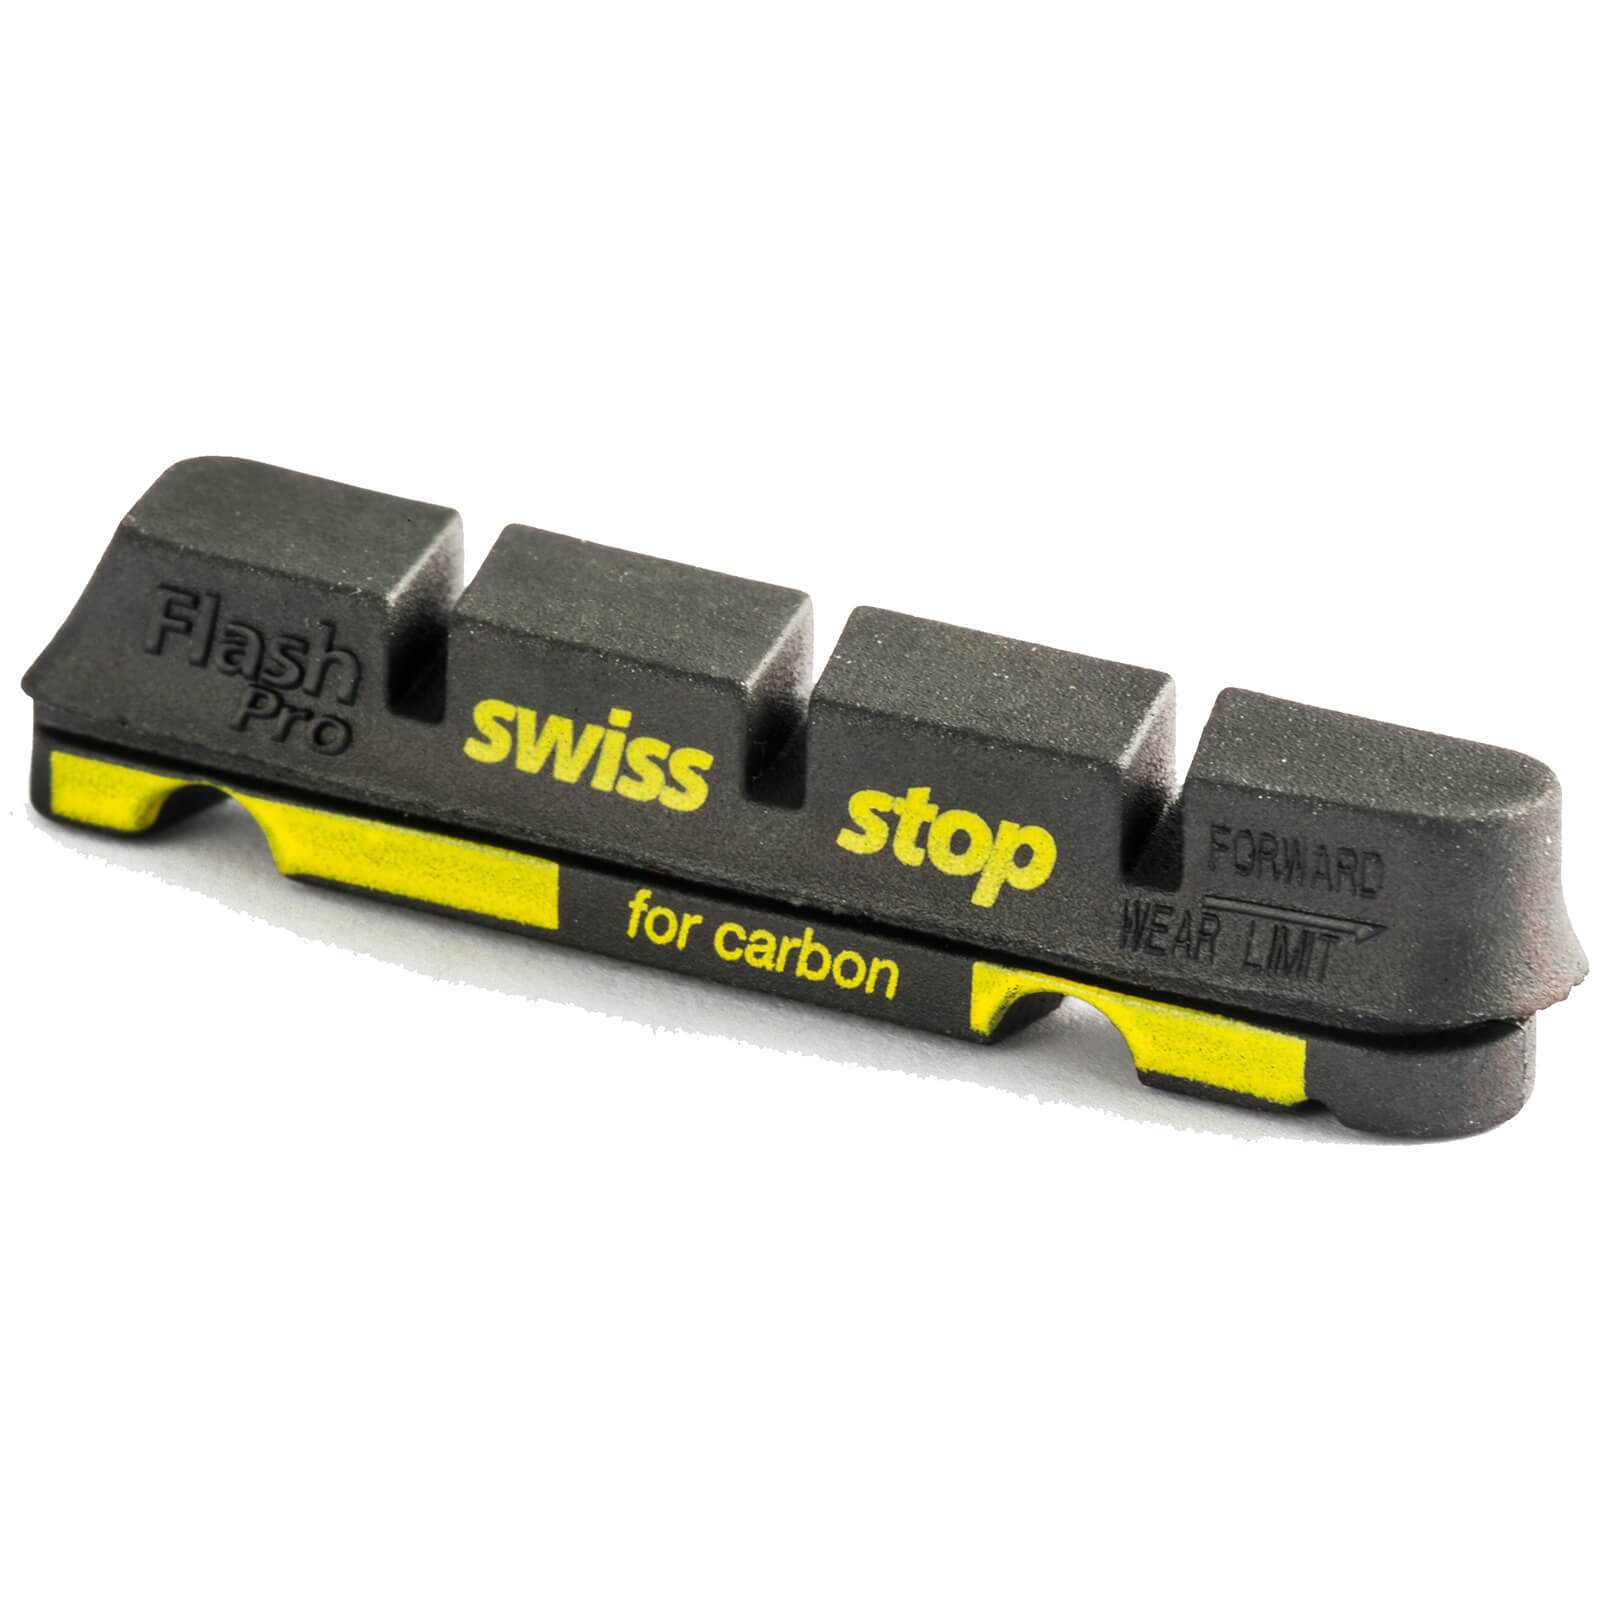 SwissStop FlashPro Brake Blocks - Black Prince - One Option - One Colour